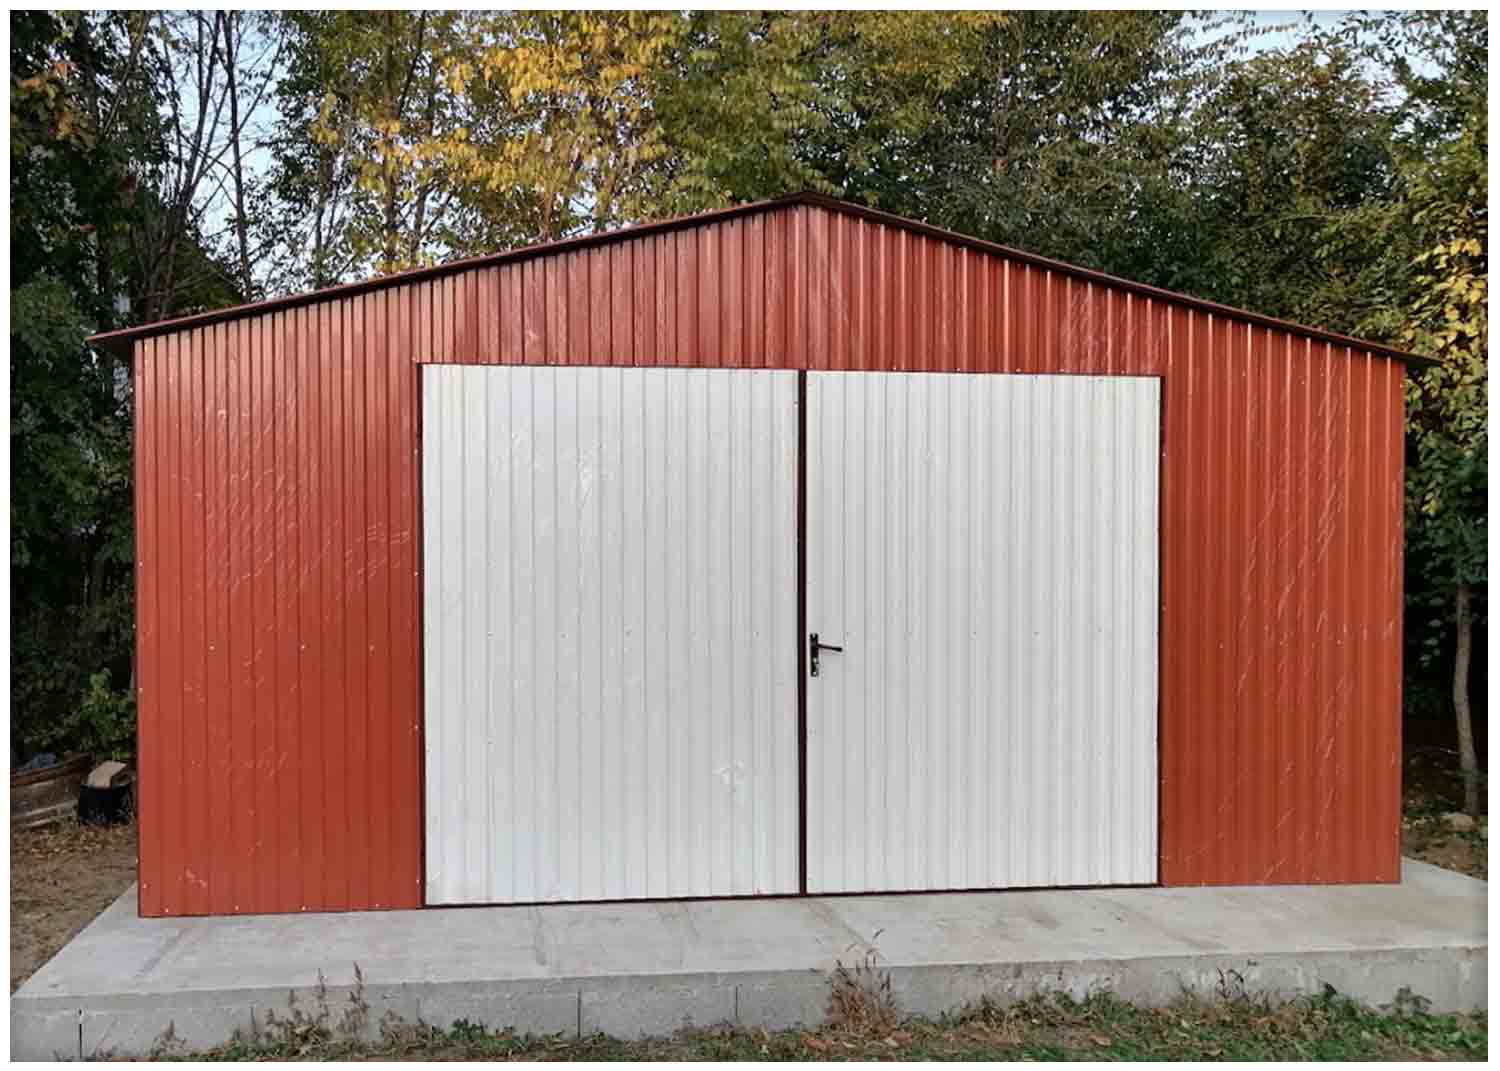 Plechová garáž 5x3 m, sedlová strecha, sklad, záhradný domček